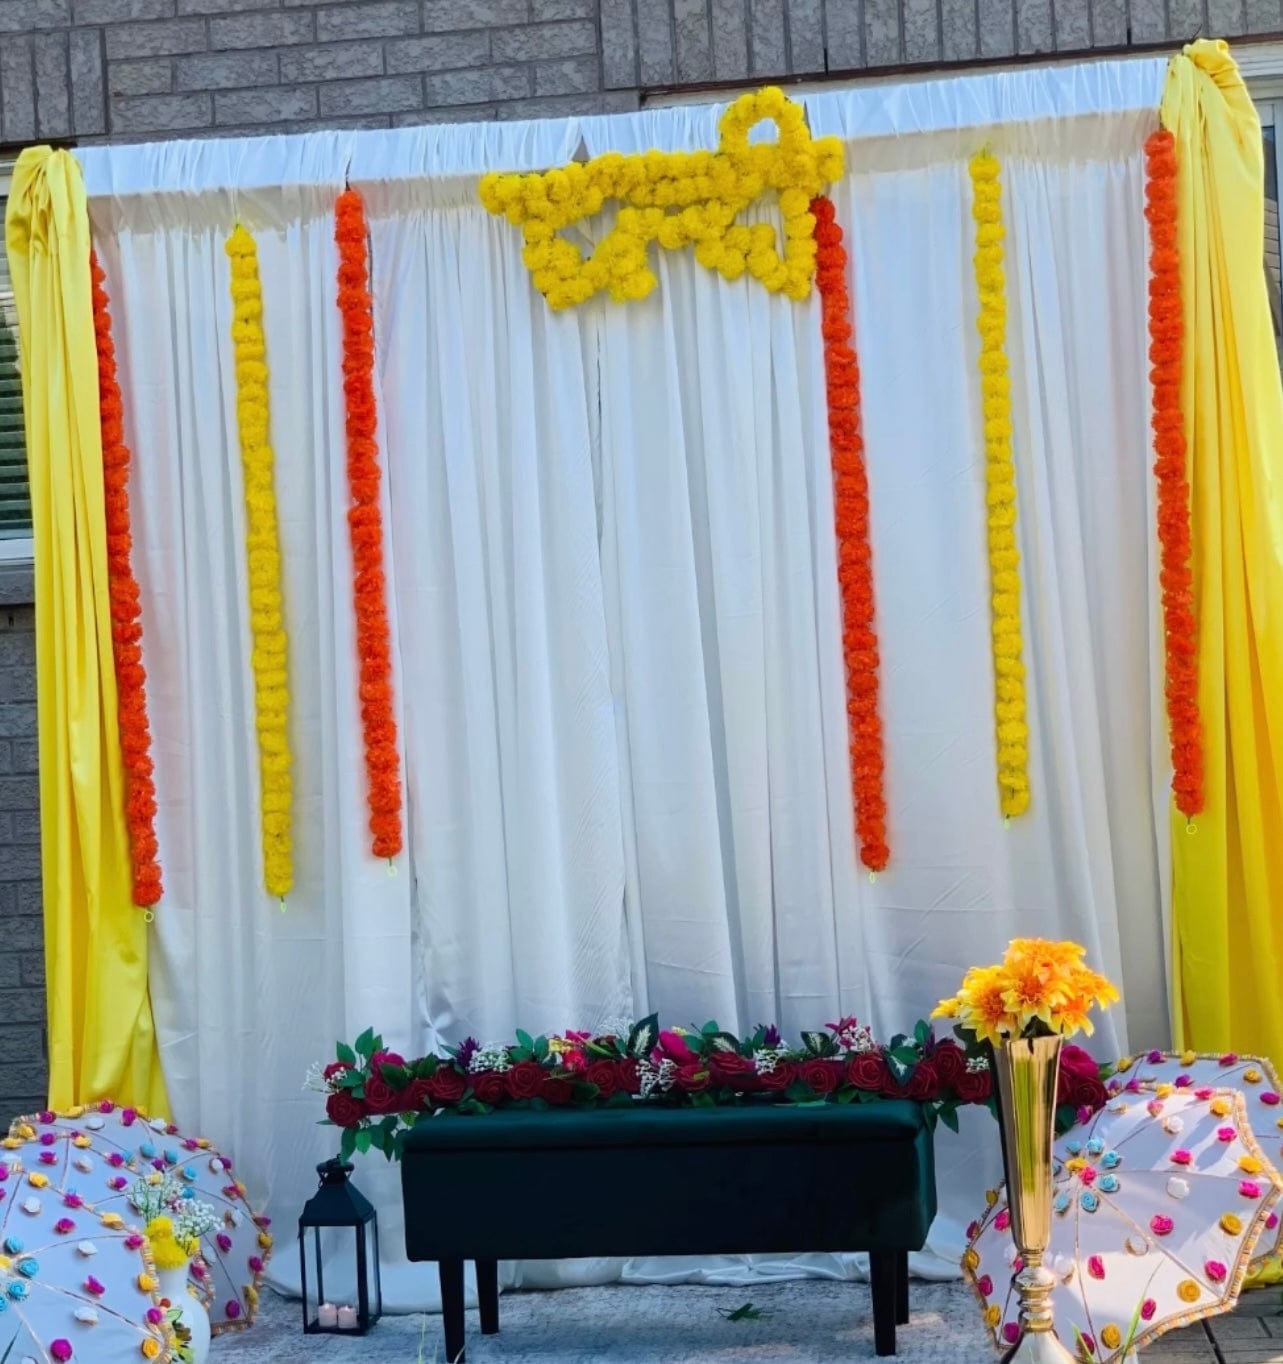 ₹250 per pc on buying 50 pcs | WhatsApp at 8619550223 umbrellas for decoration LAMANSH Decorative Multicolored Flower Umbrella's for haldi mehendi wedding event decoration